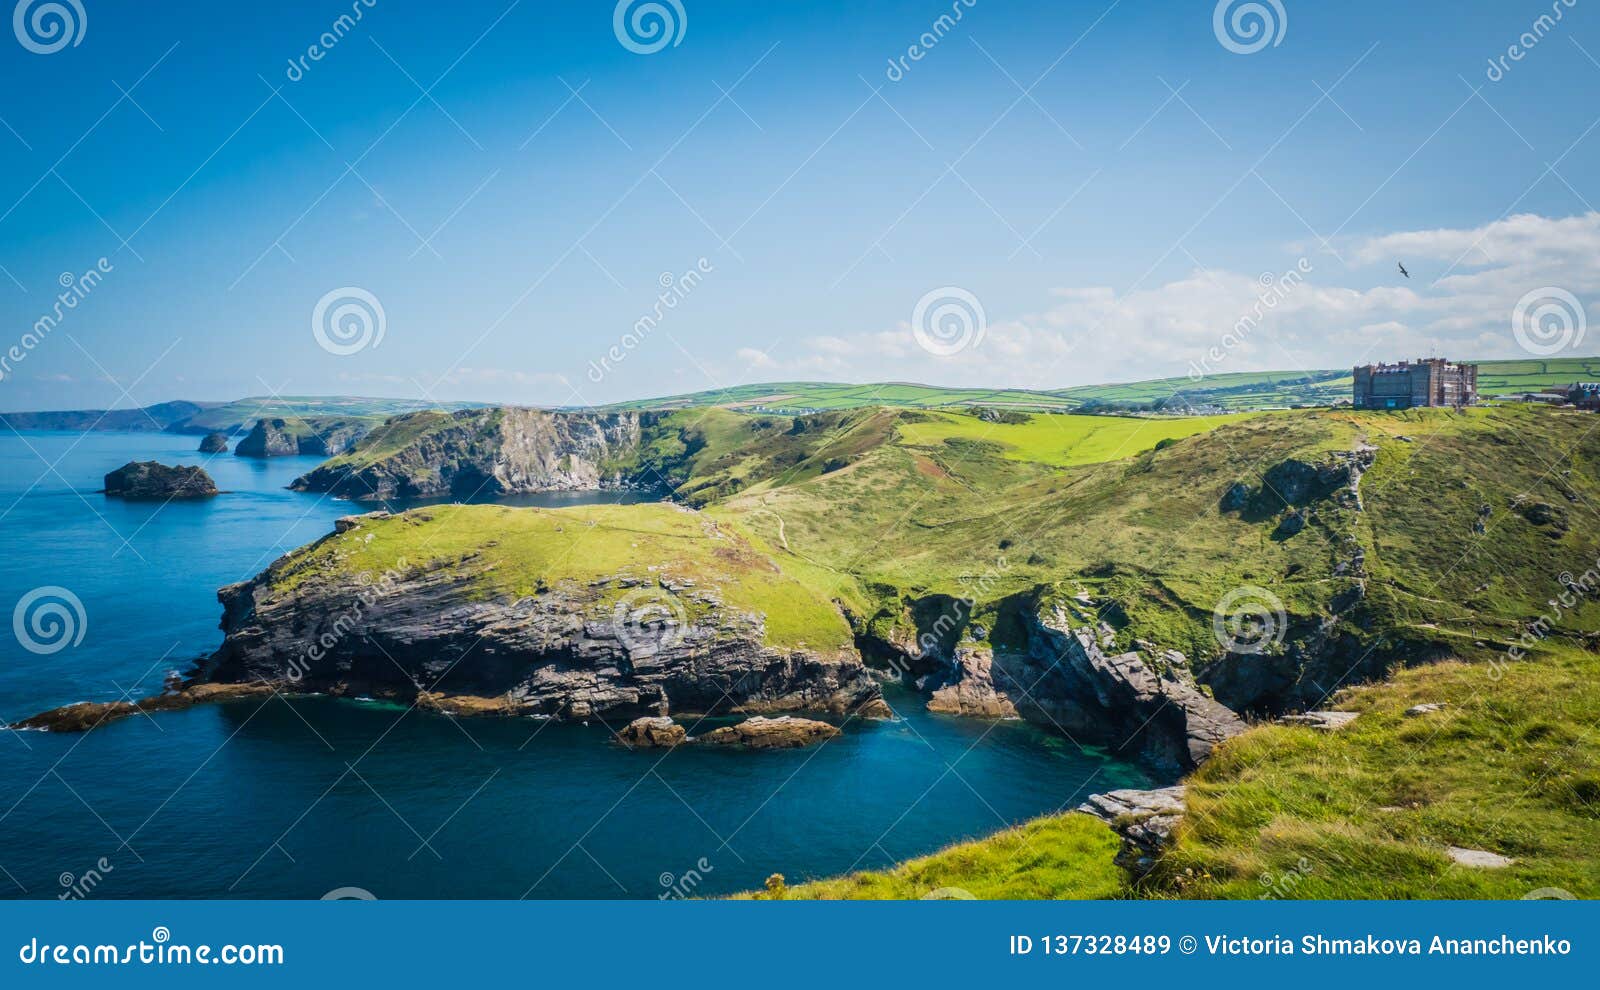 tintagel castle landscape in cornwall, england with the atlantic ocean coastline